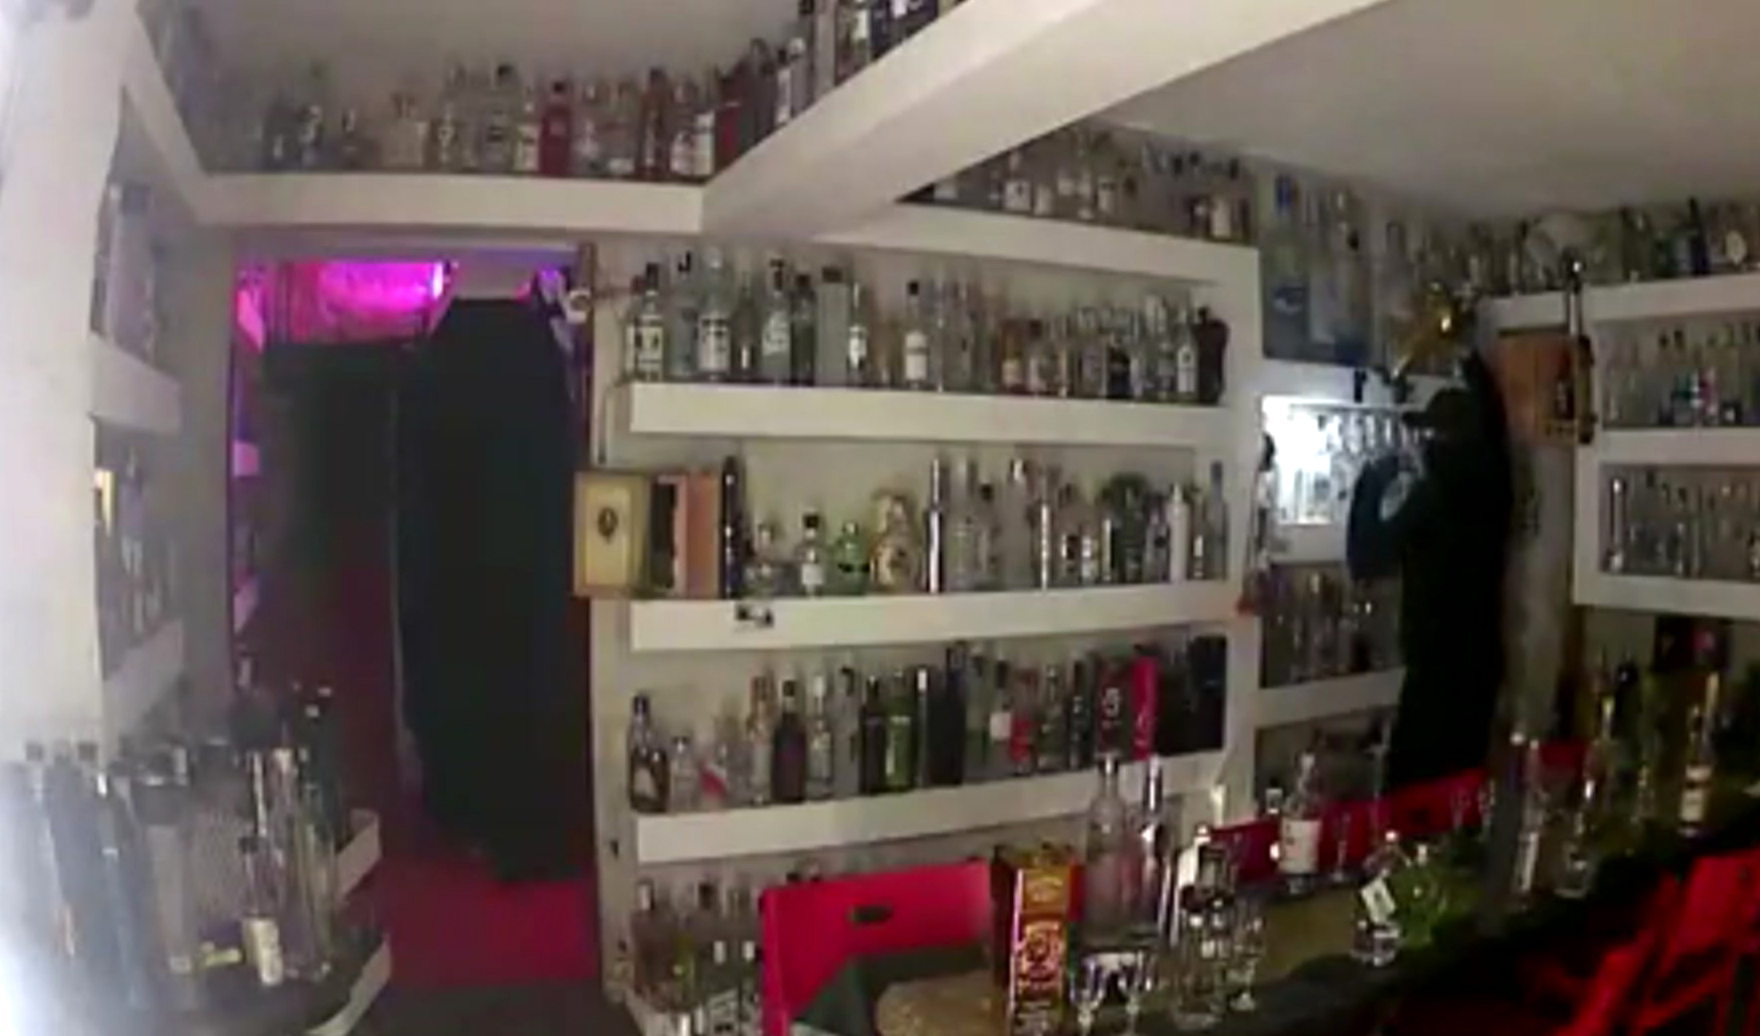 Image taken from CCTV showing a man stealing a bottle of vodka from Cafe 33 bar in Copenhagen (Brian Ingberg via AP)